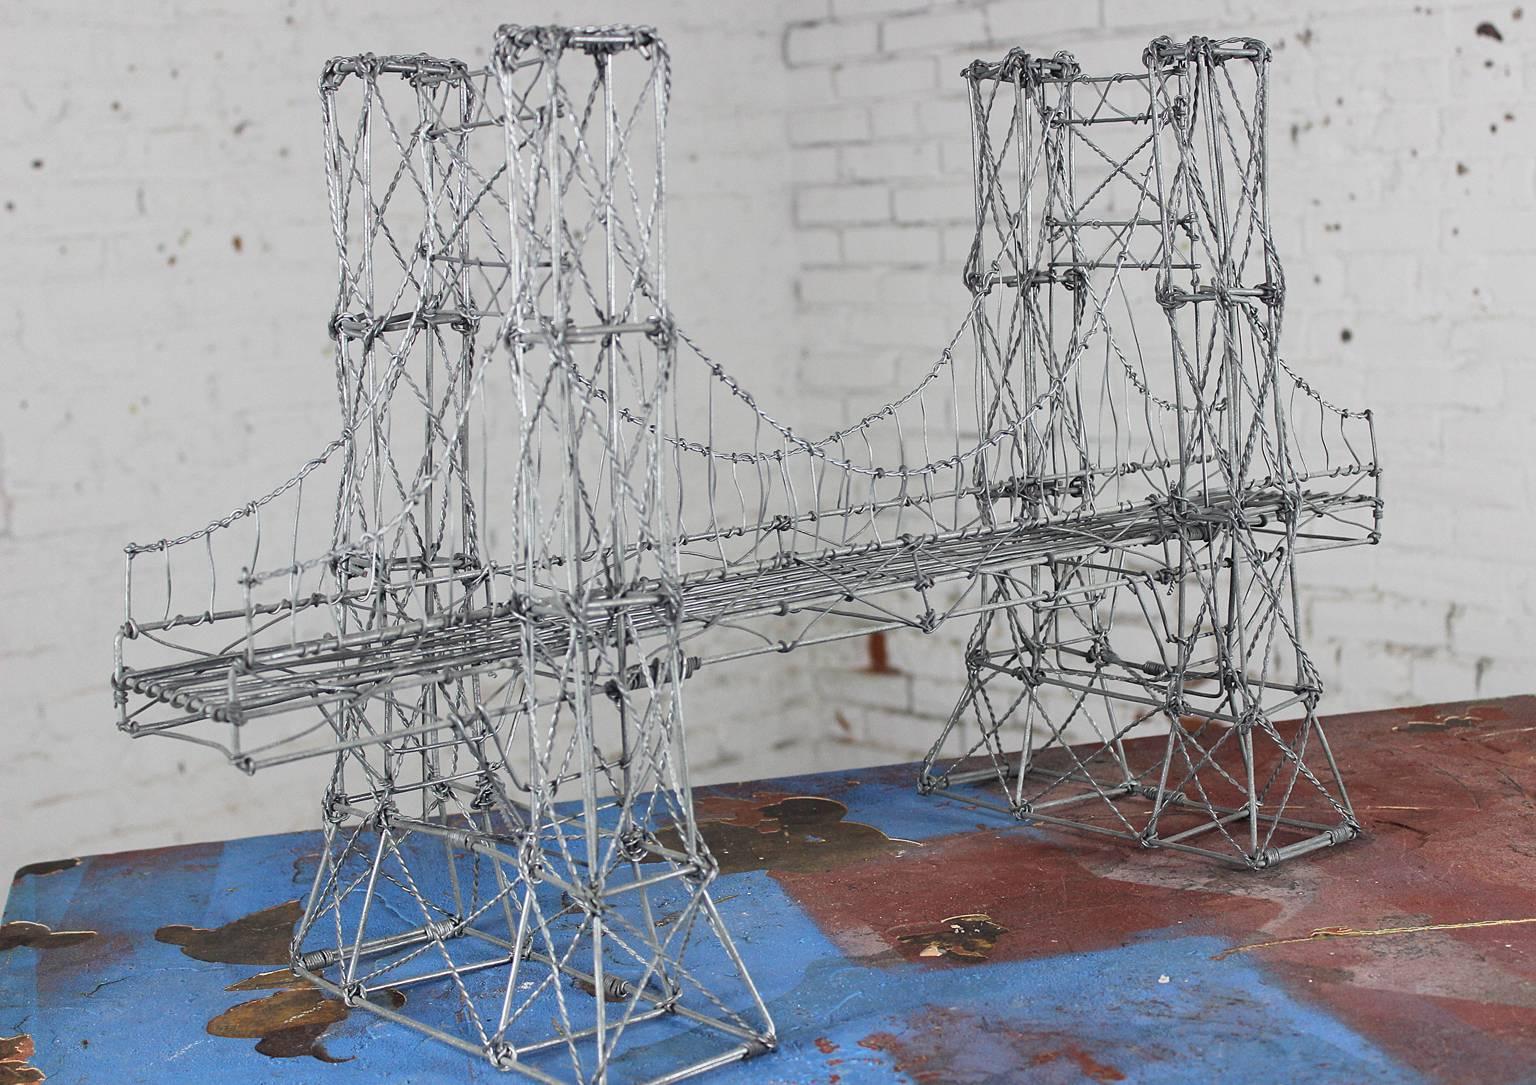 20th Century Vintage Folk Art Wire Suspension Bridge Model Sculpture